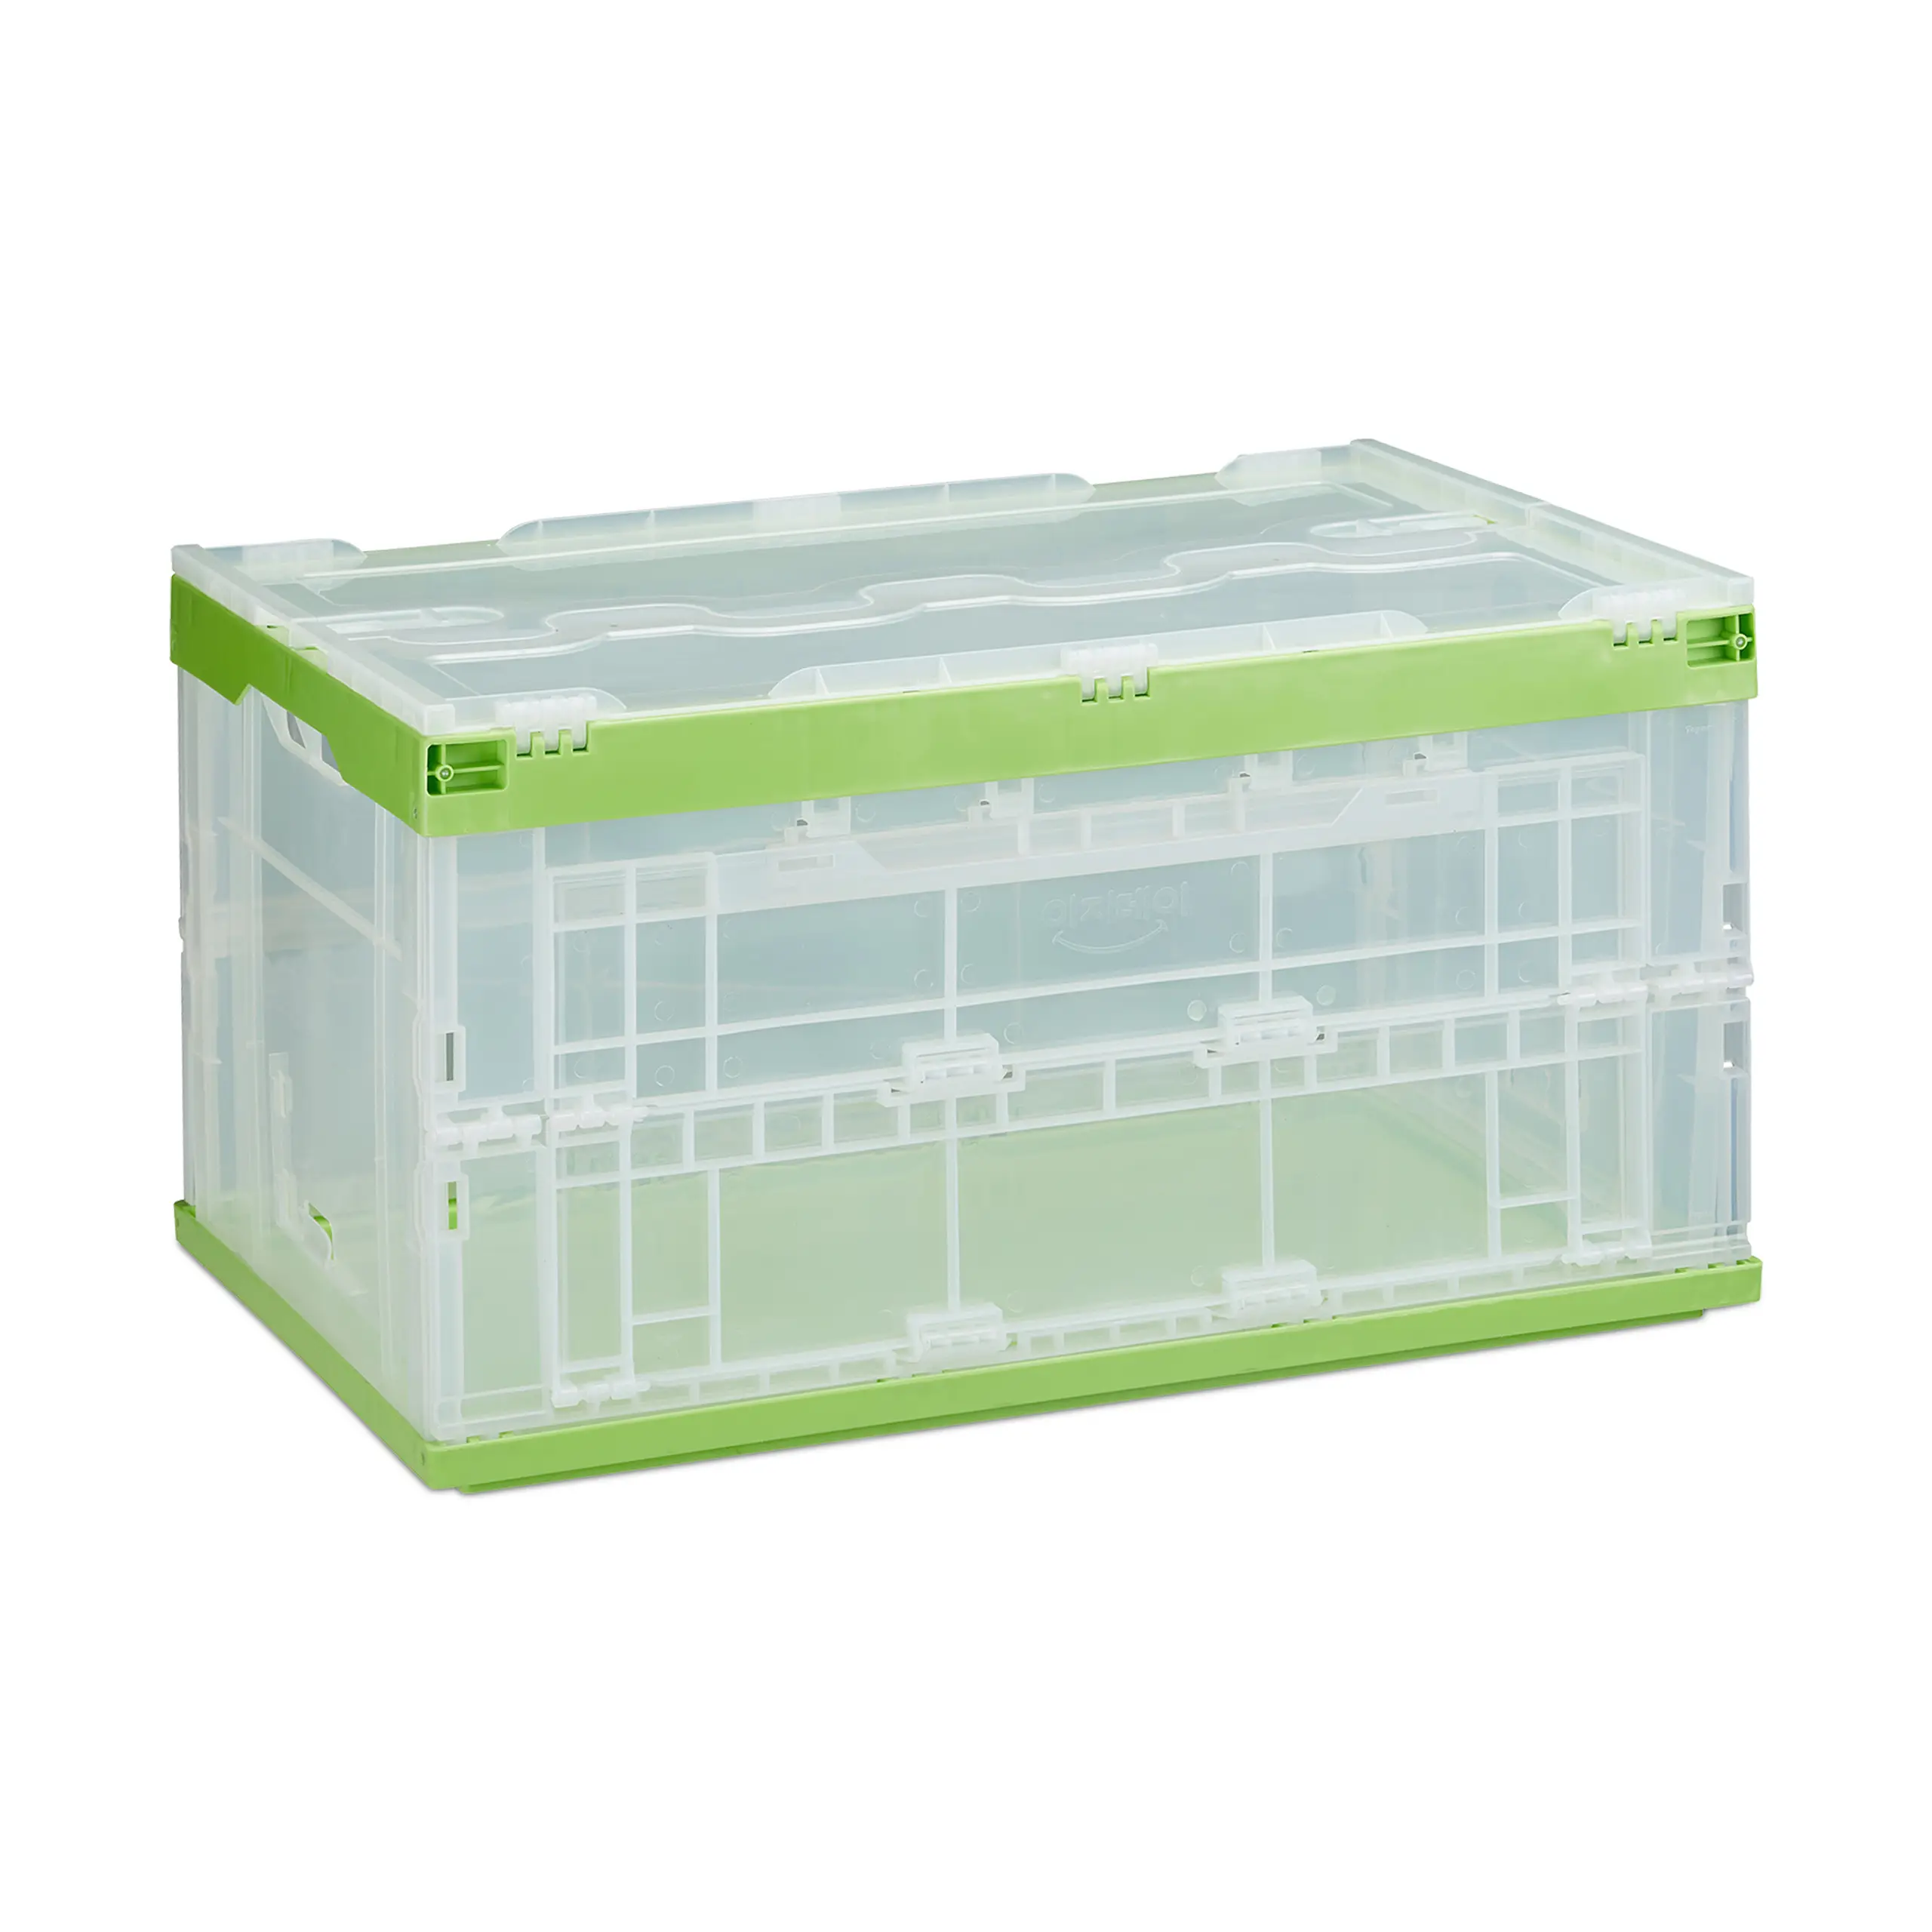 1 x Transportbox gr眉n-transparent Deckel